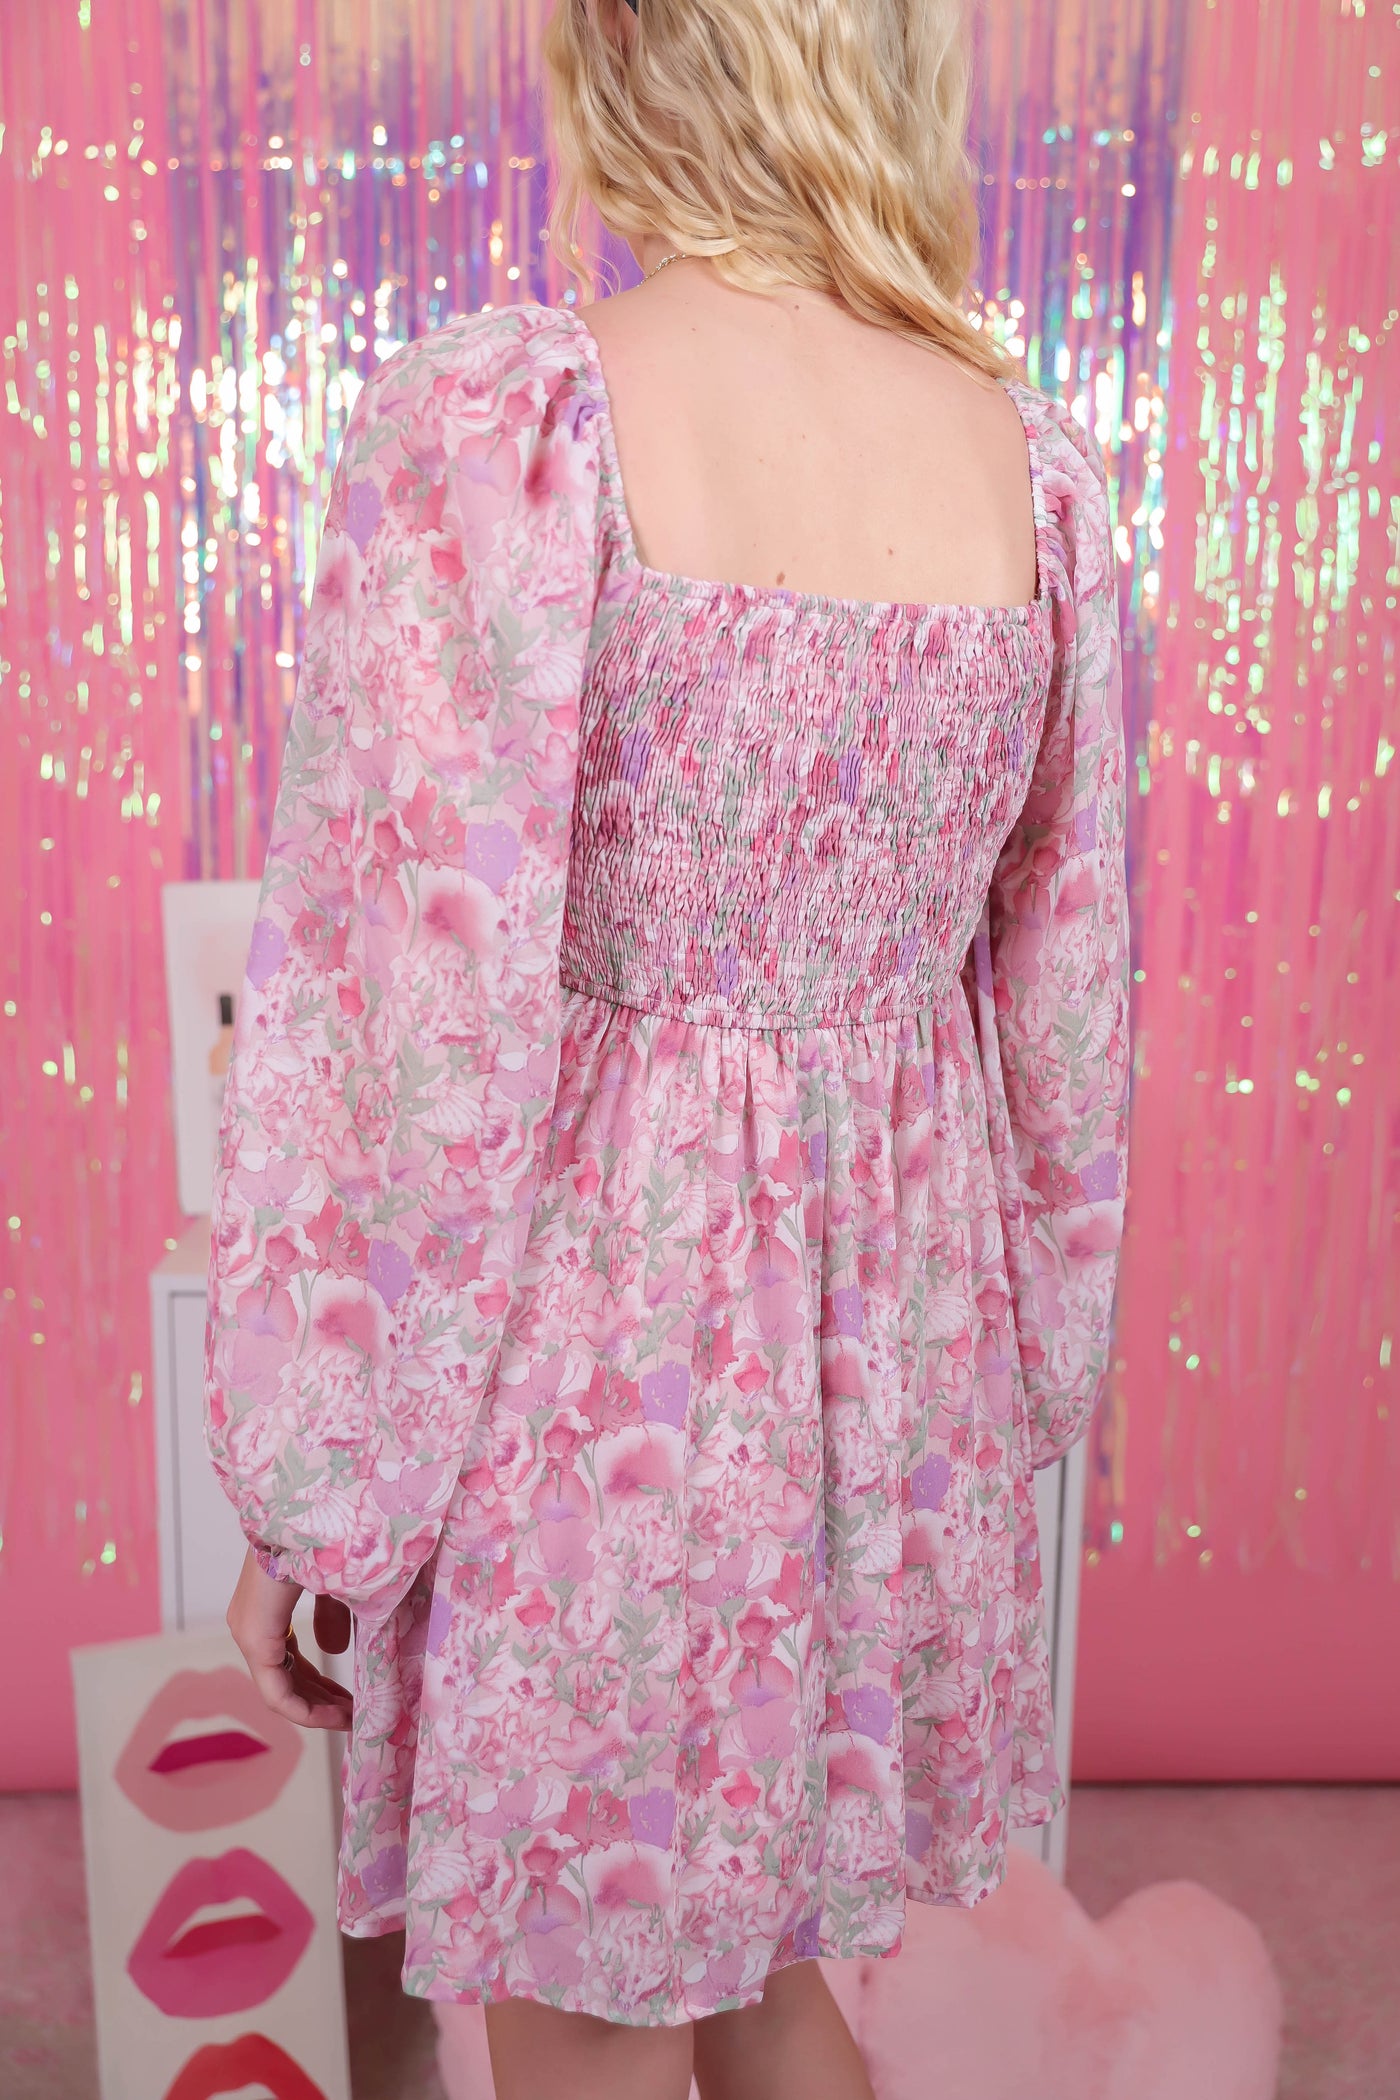 Blush Floral Long Sleeve Dress- Pink Long Sleeve Dress